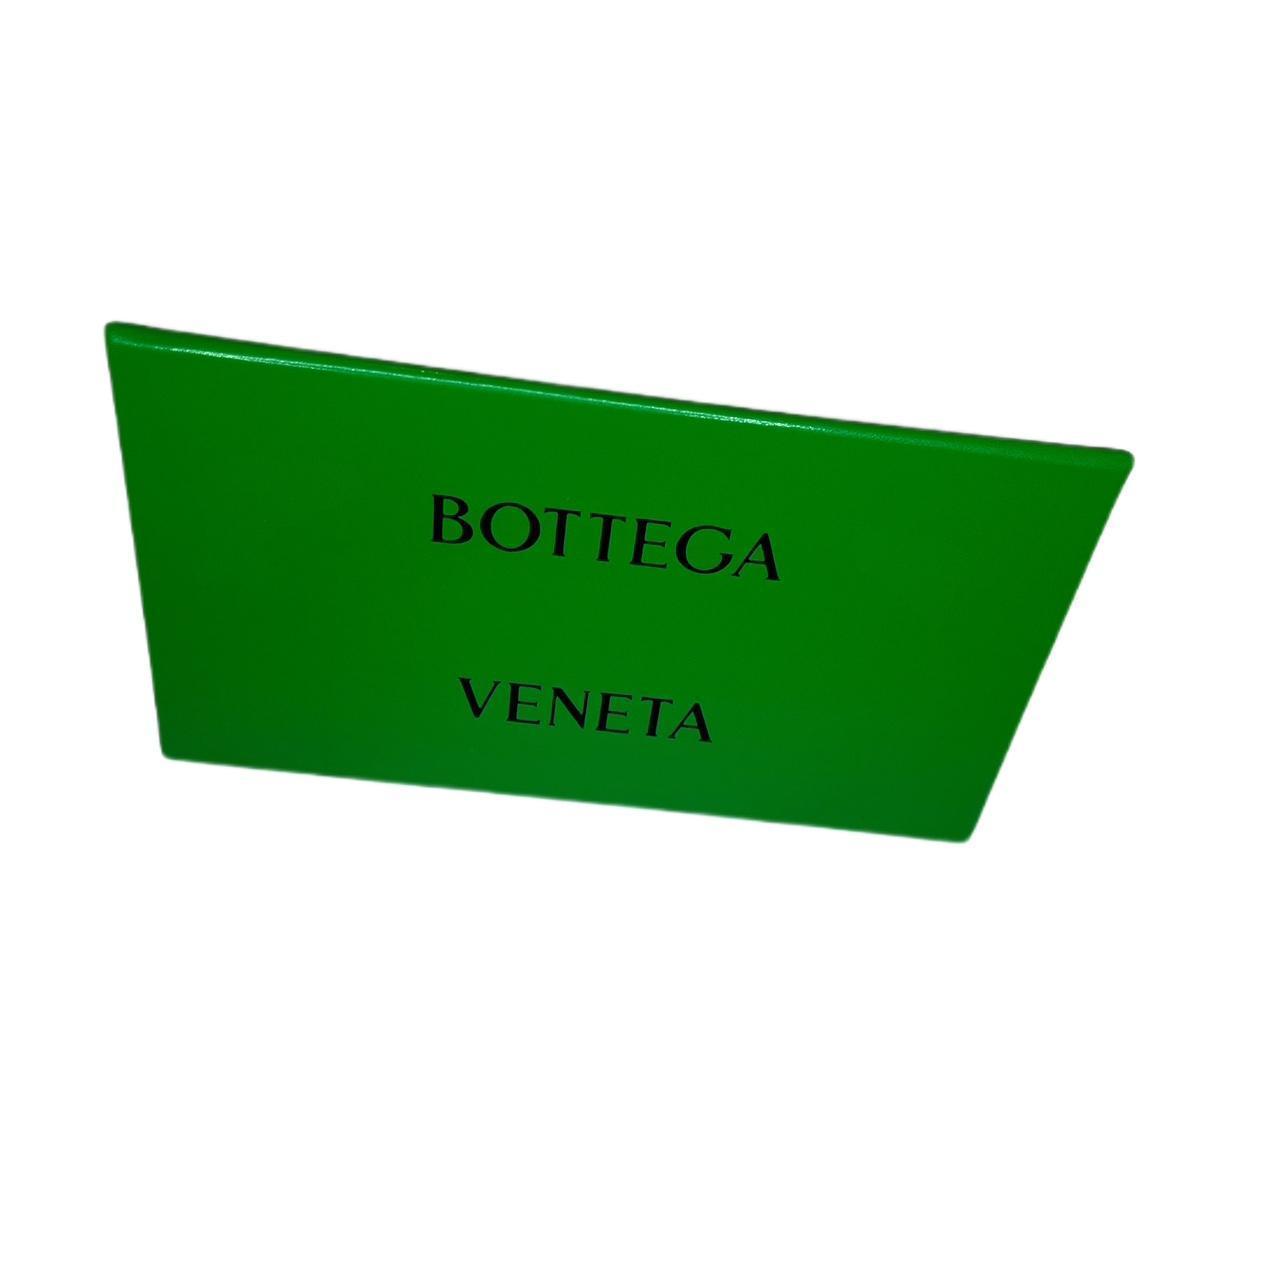 Bottega Veneta Sunglasses Case Comes with... - Depop